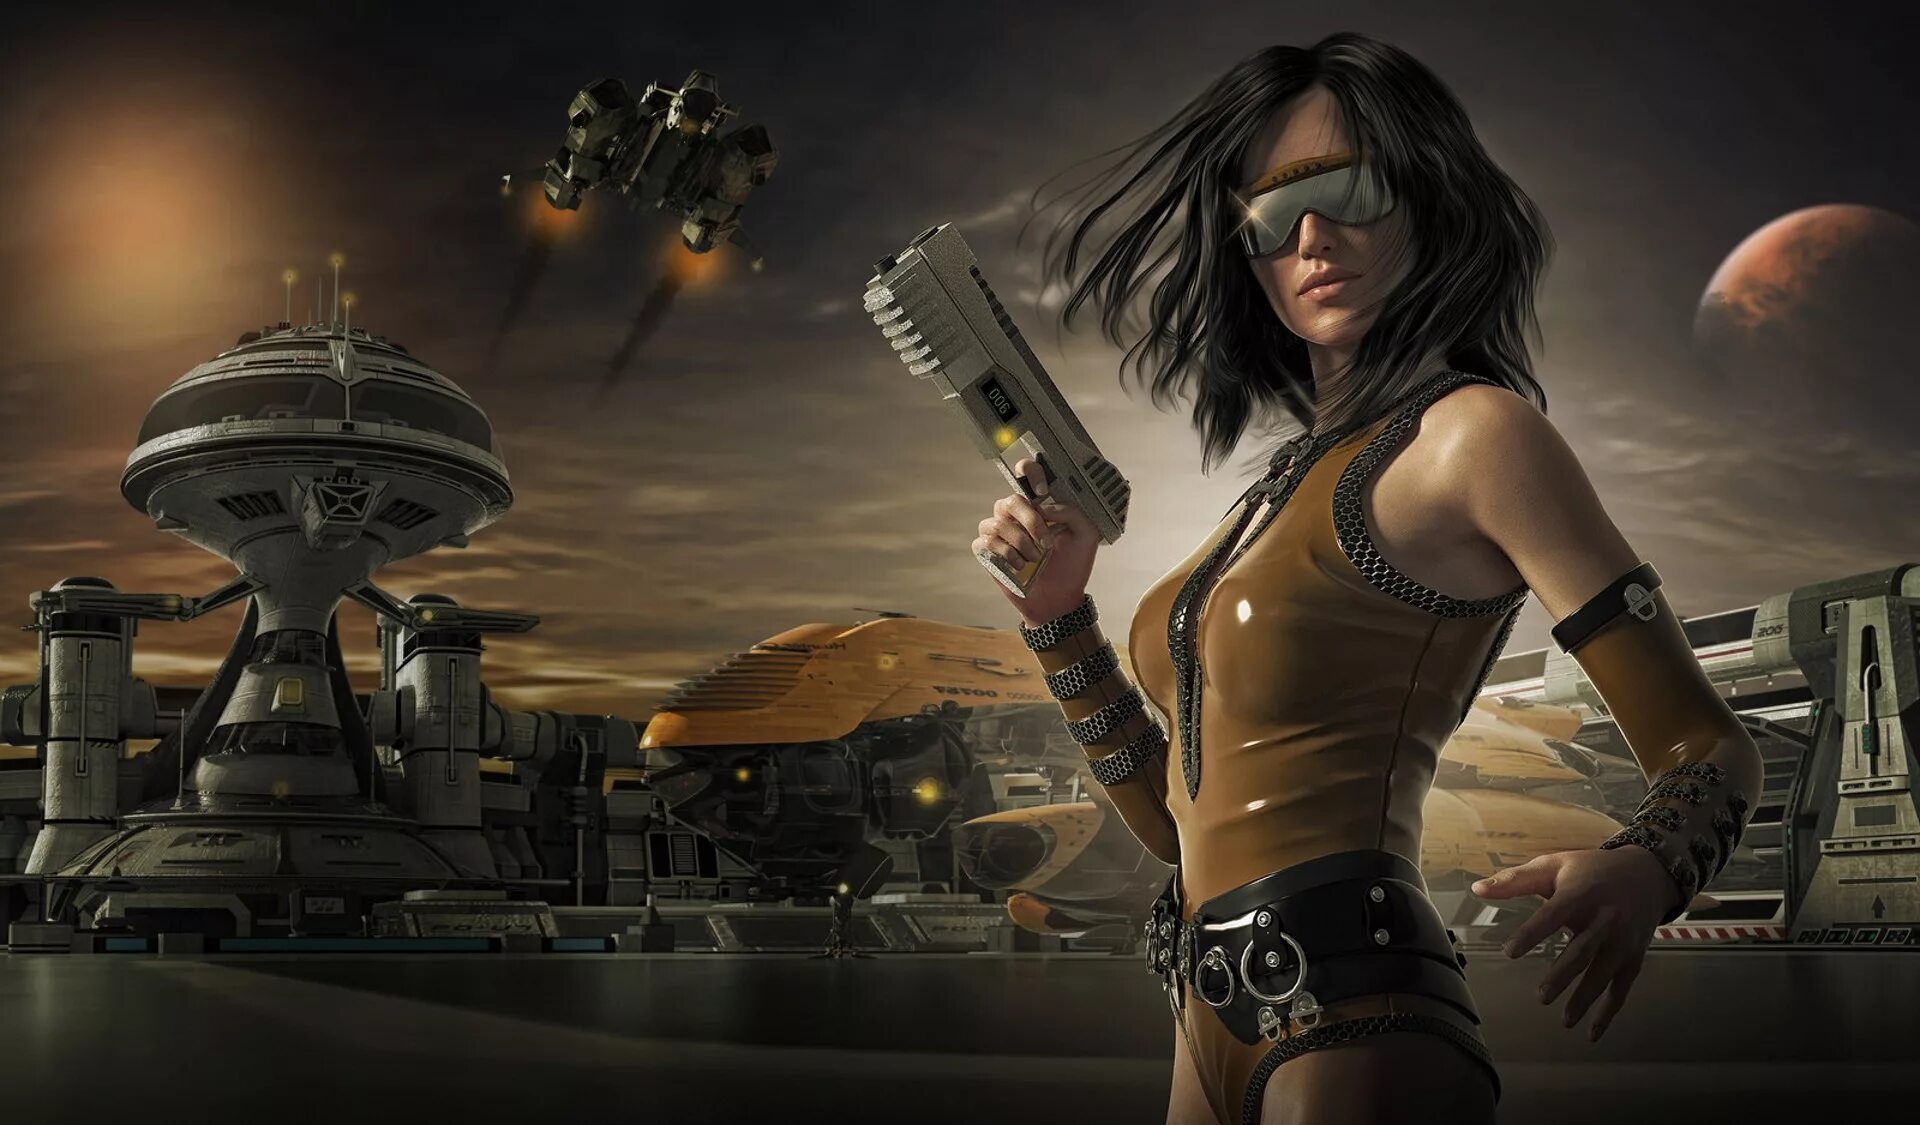 Cyberpunk 2077 девушка воин. Cyberpunk 2077 киборги. Девушки будущего. Компьютерные девушки. Фантастические компьютерные игры